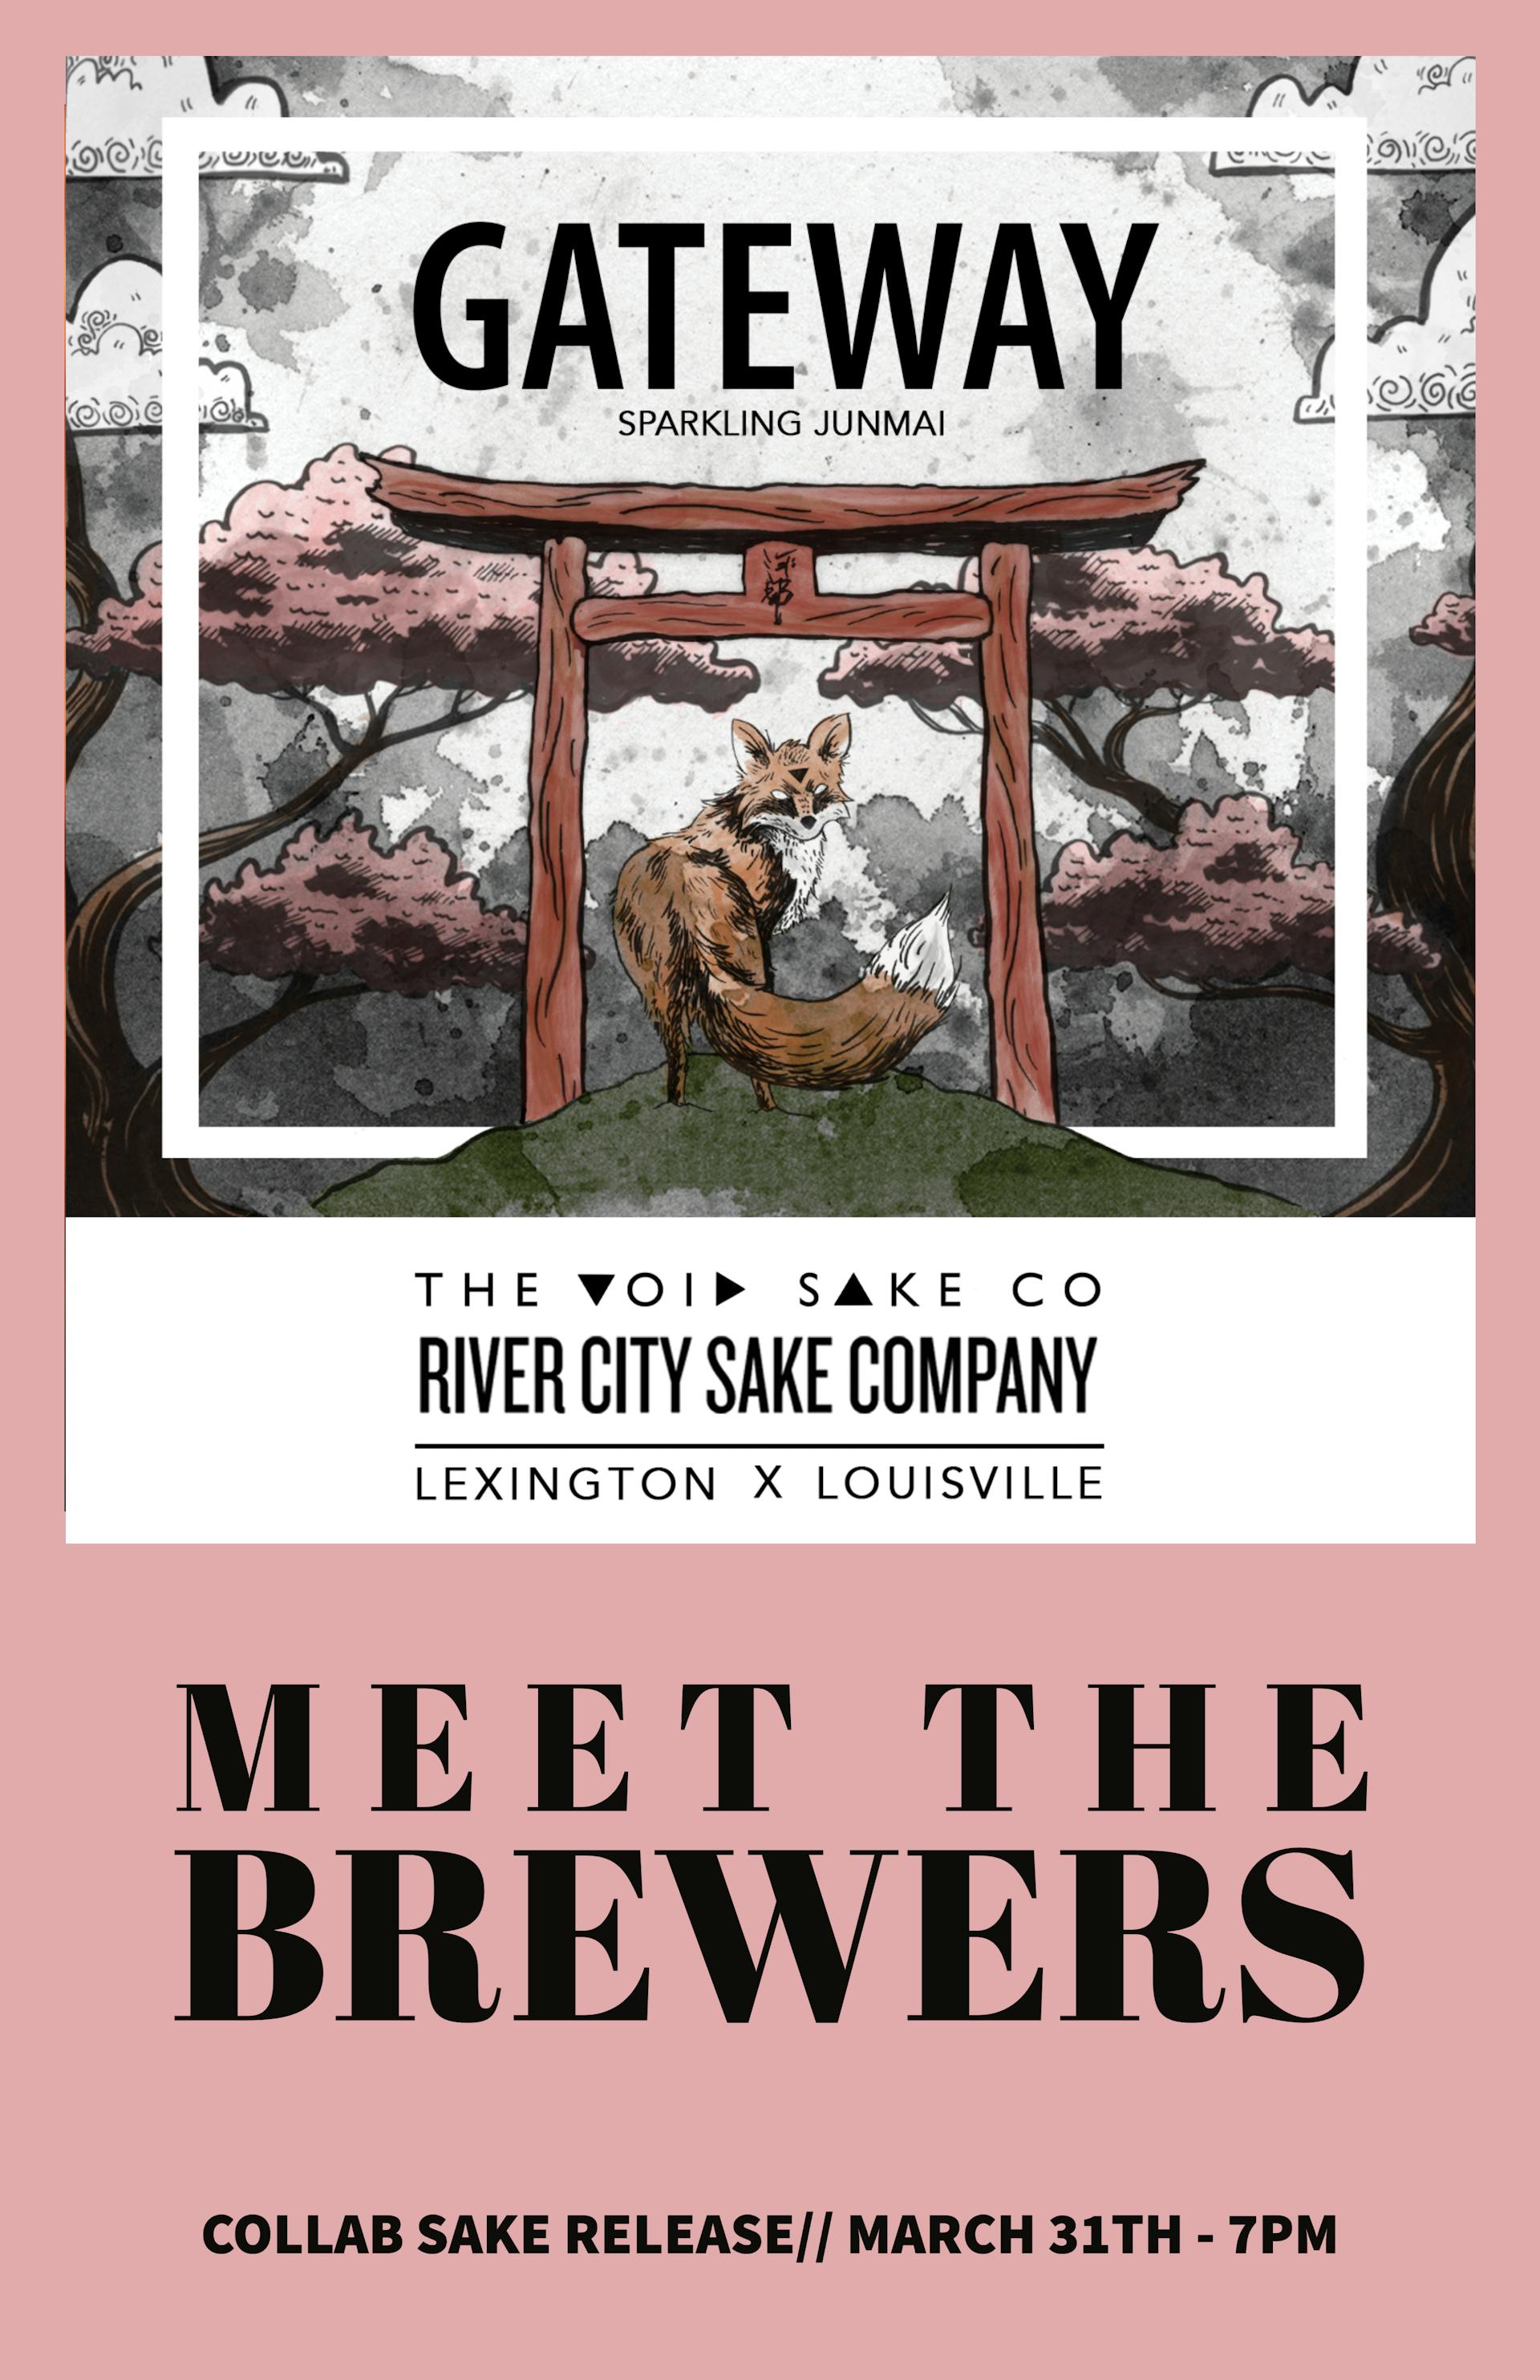 Meet The Brewer: A Collab Sake Release